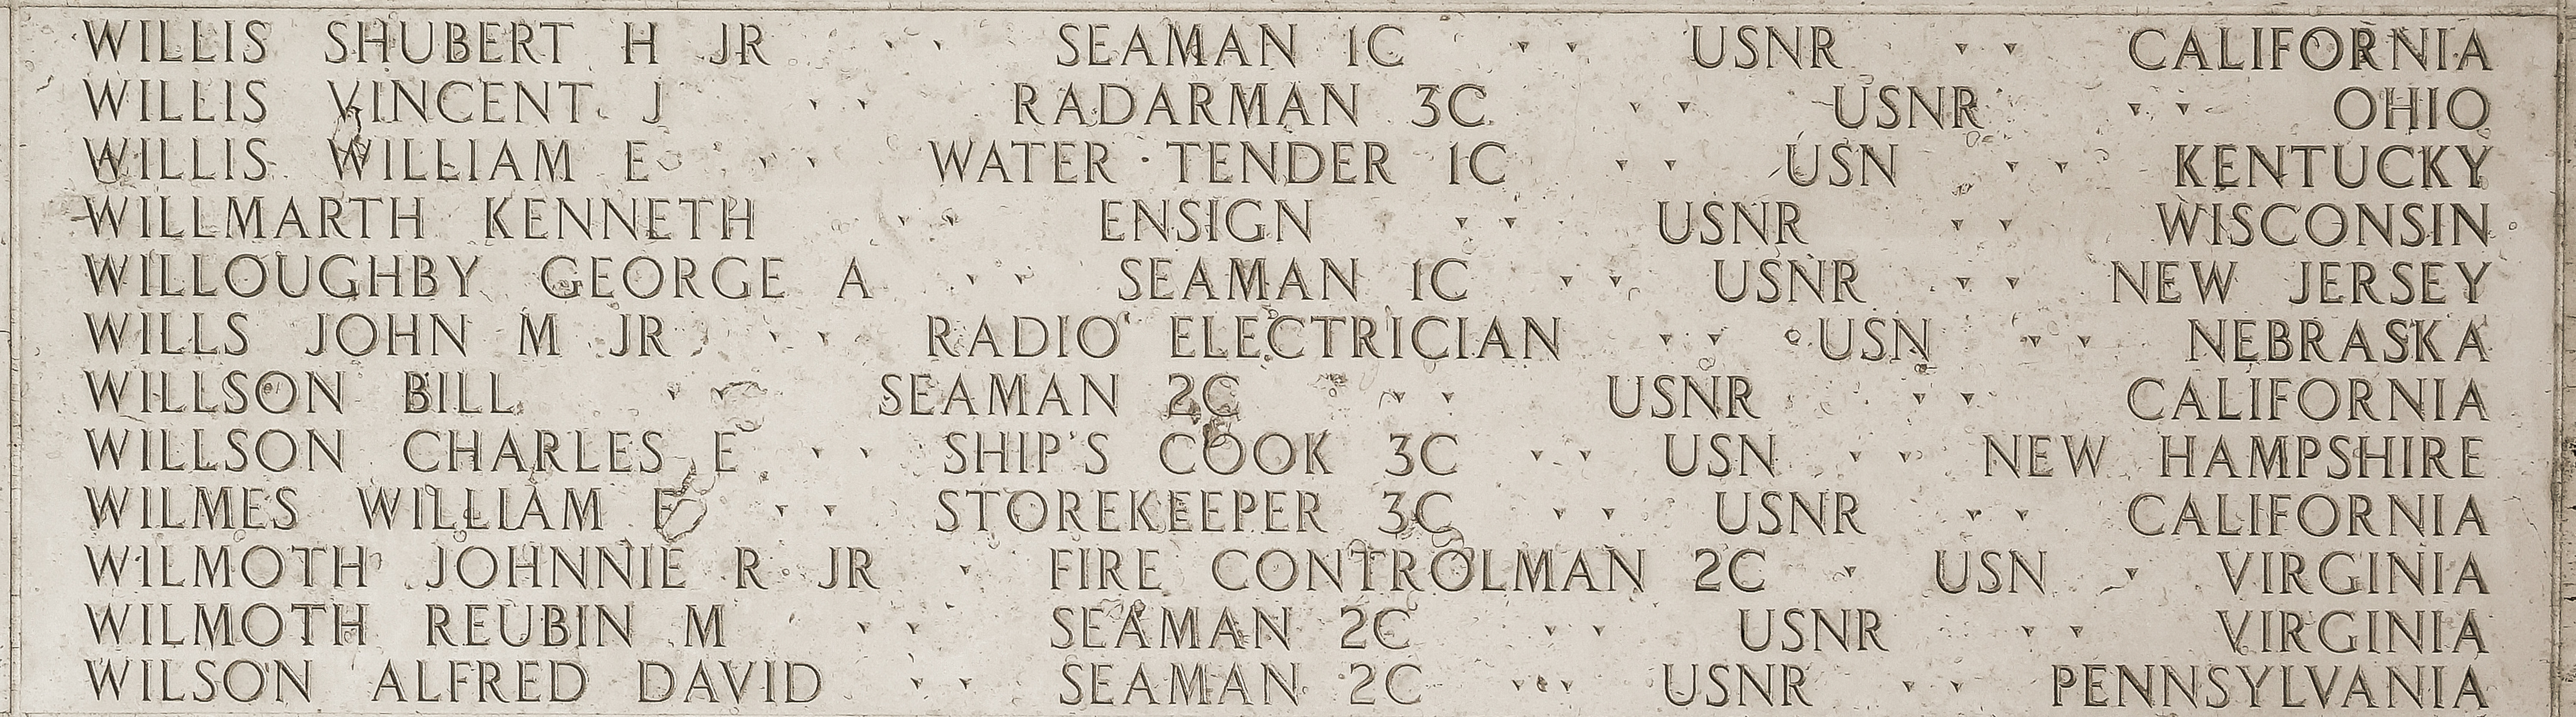 Reubin M. Wilmoth, Seaman Second Class